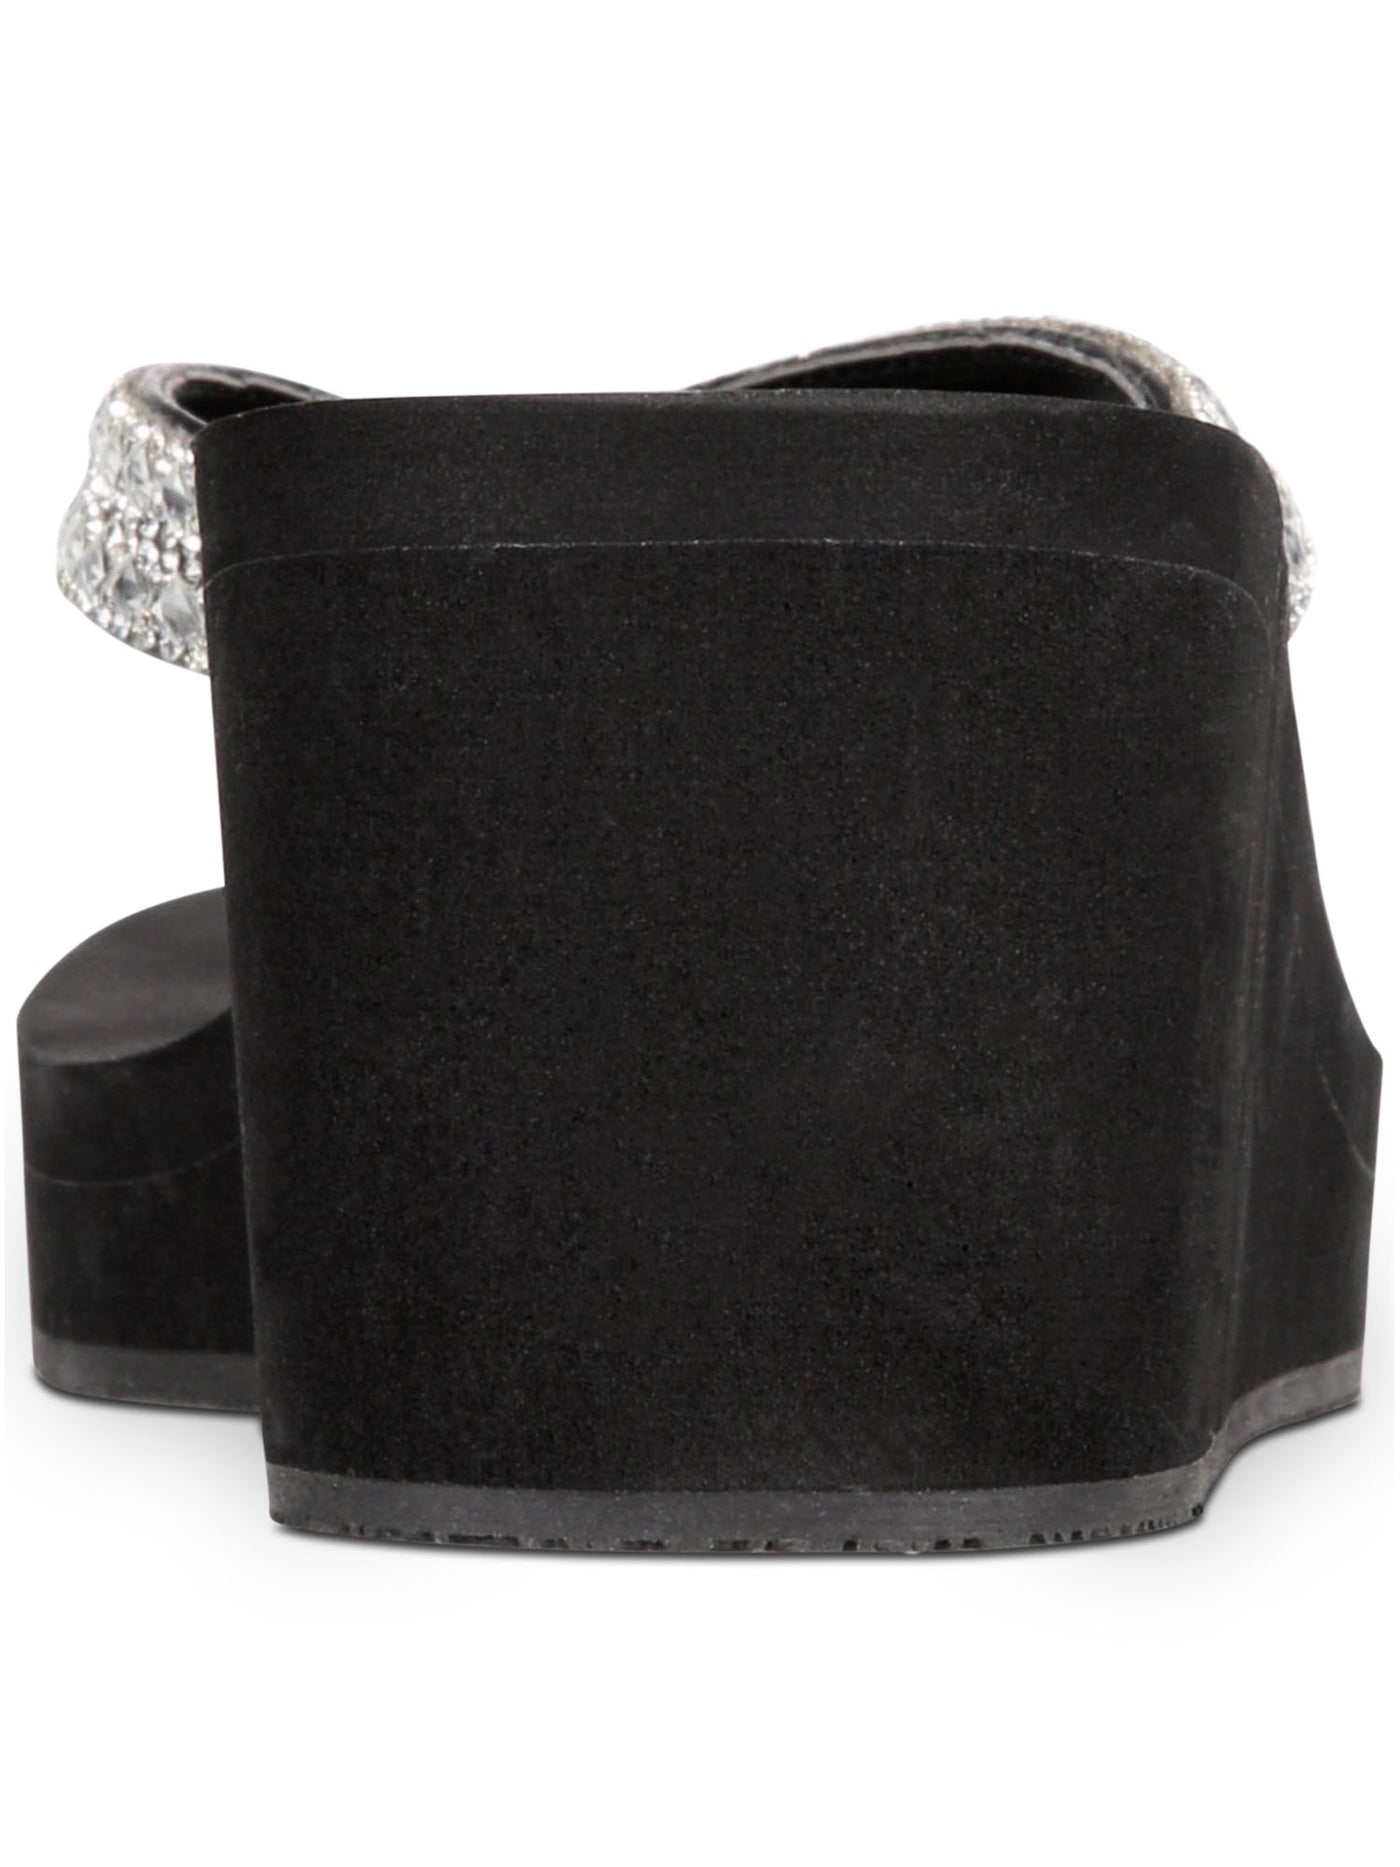 THALIA SODI Womens Black Rhinestone Embellishment Comfort Emira Round Toe Wedge Slip On Flip Flop Sandal 10 M